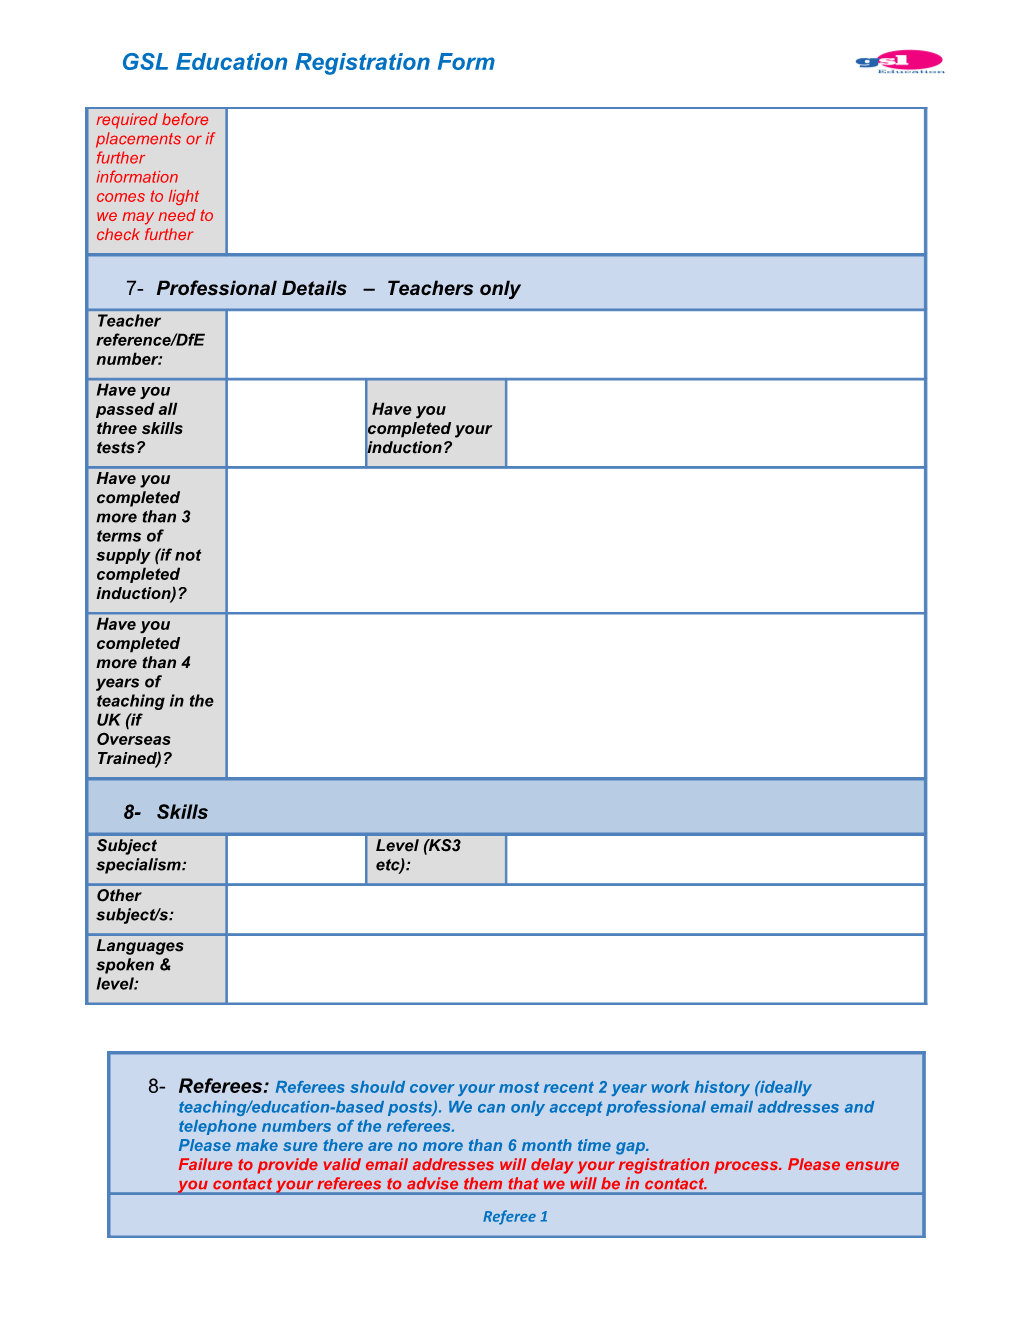 GSL Education Registration Form